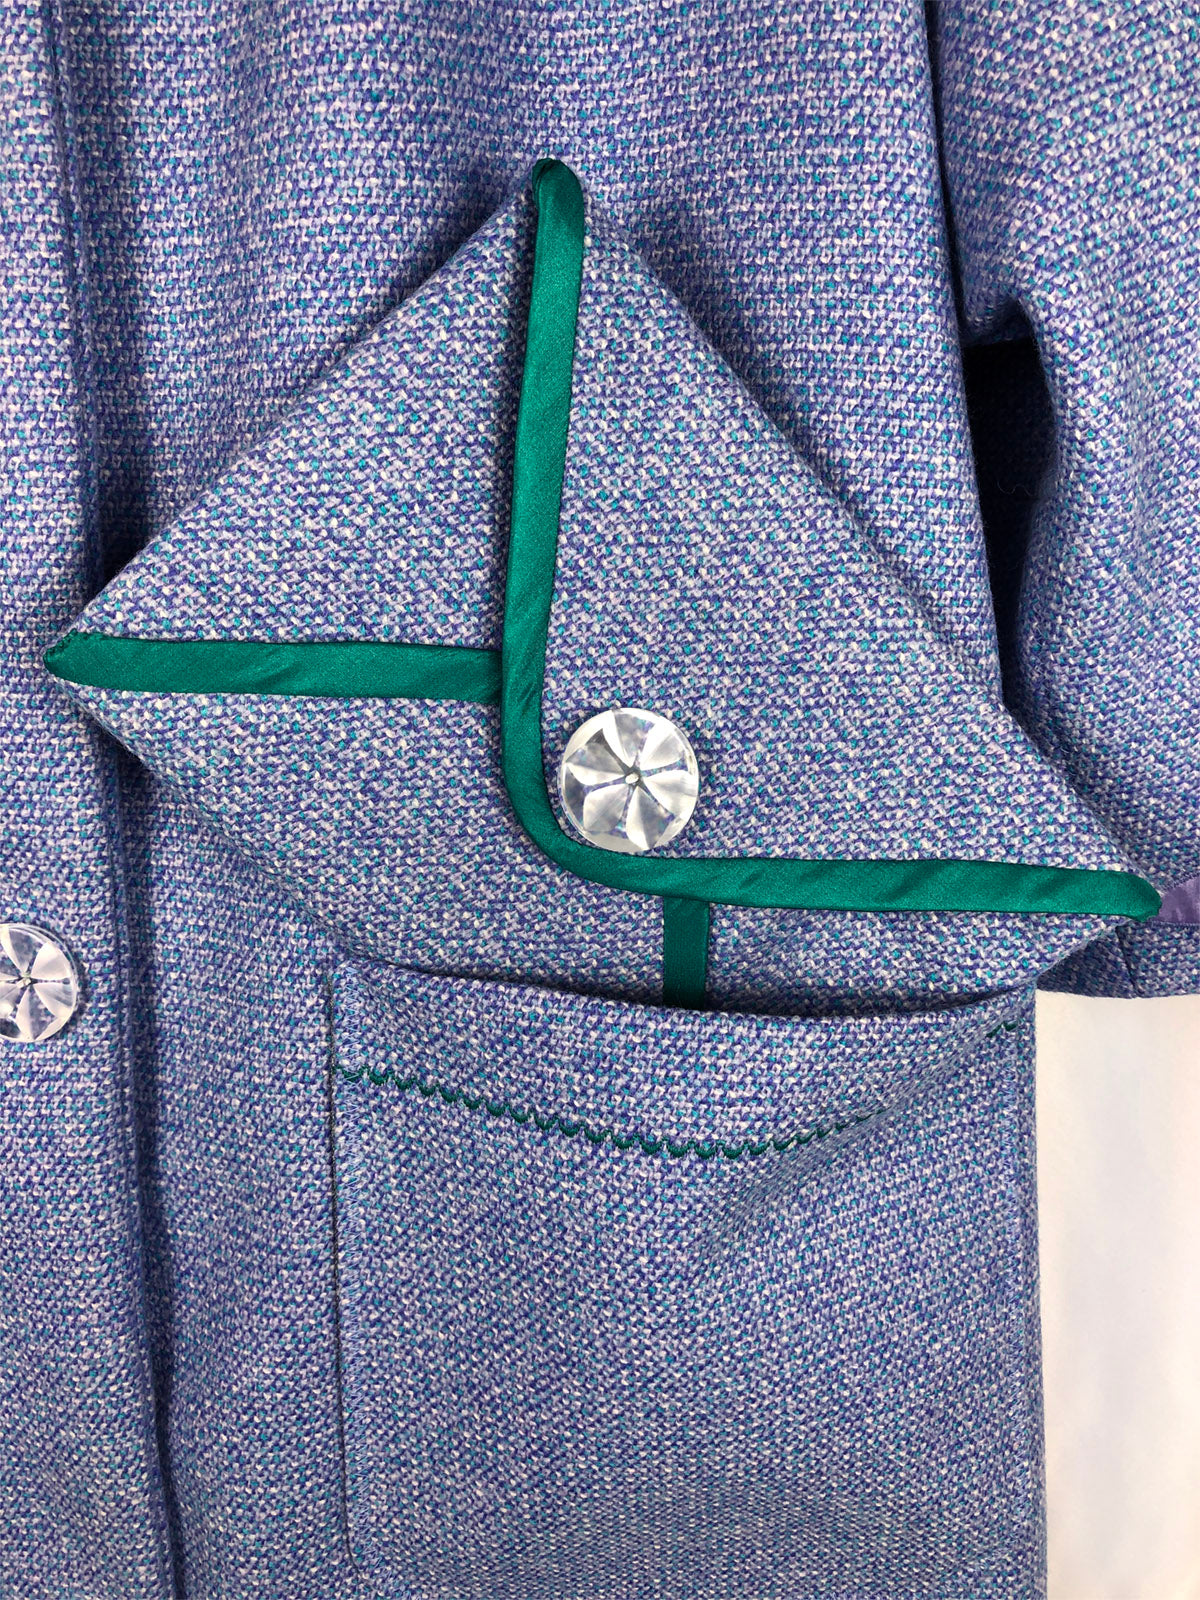 Lavender-Blue Wool Coat with Vast Designs